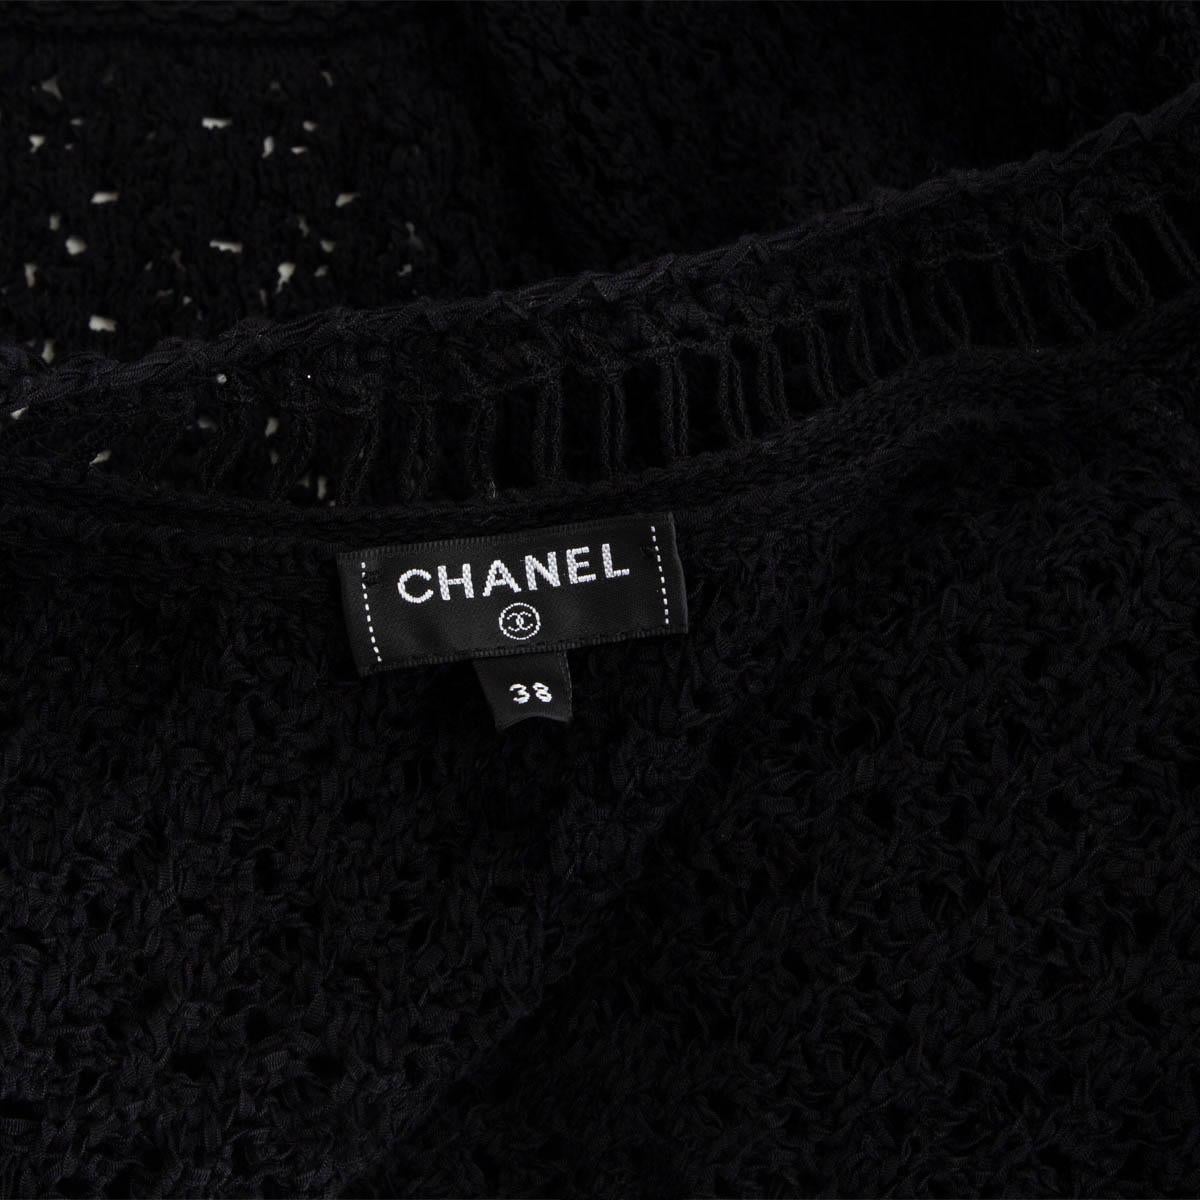 Women's CHANEL black cotton 2020 CROCHET Cardigan Sweater 38 S